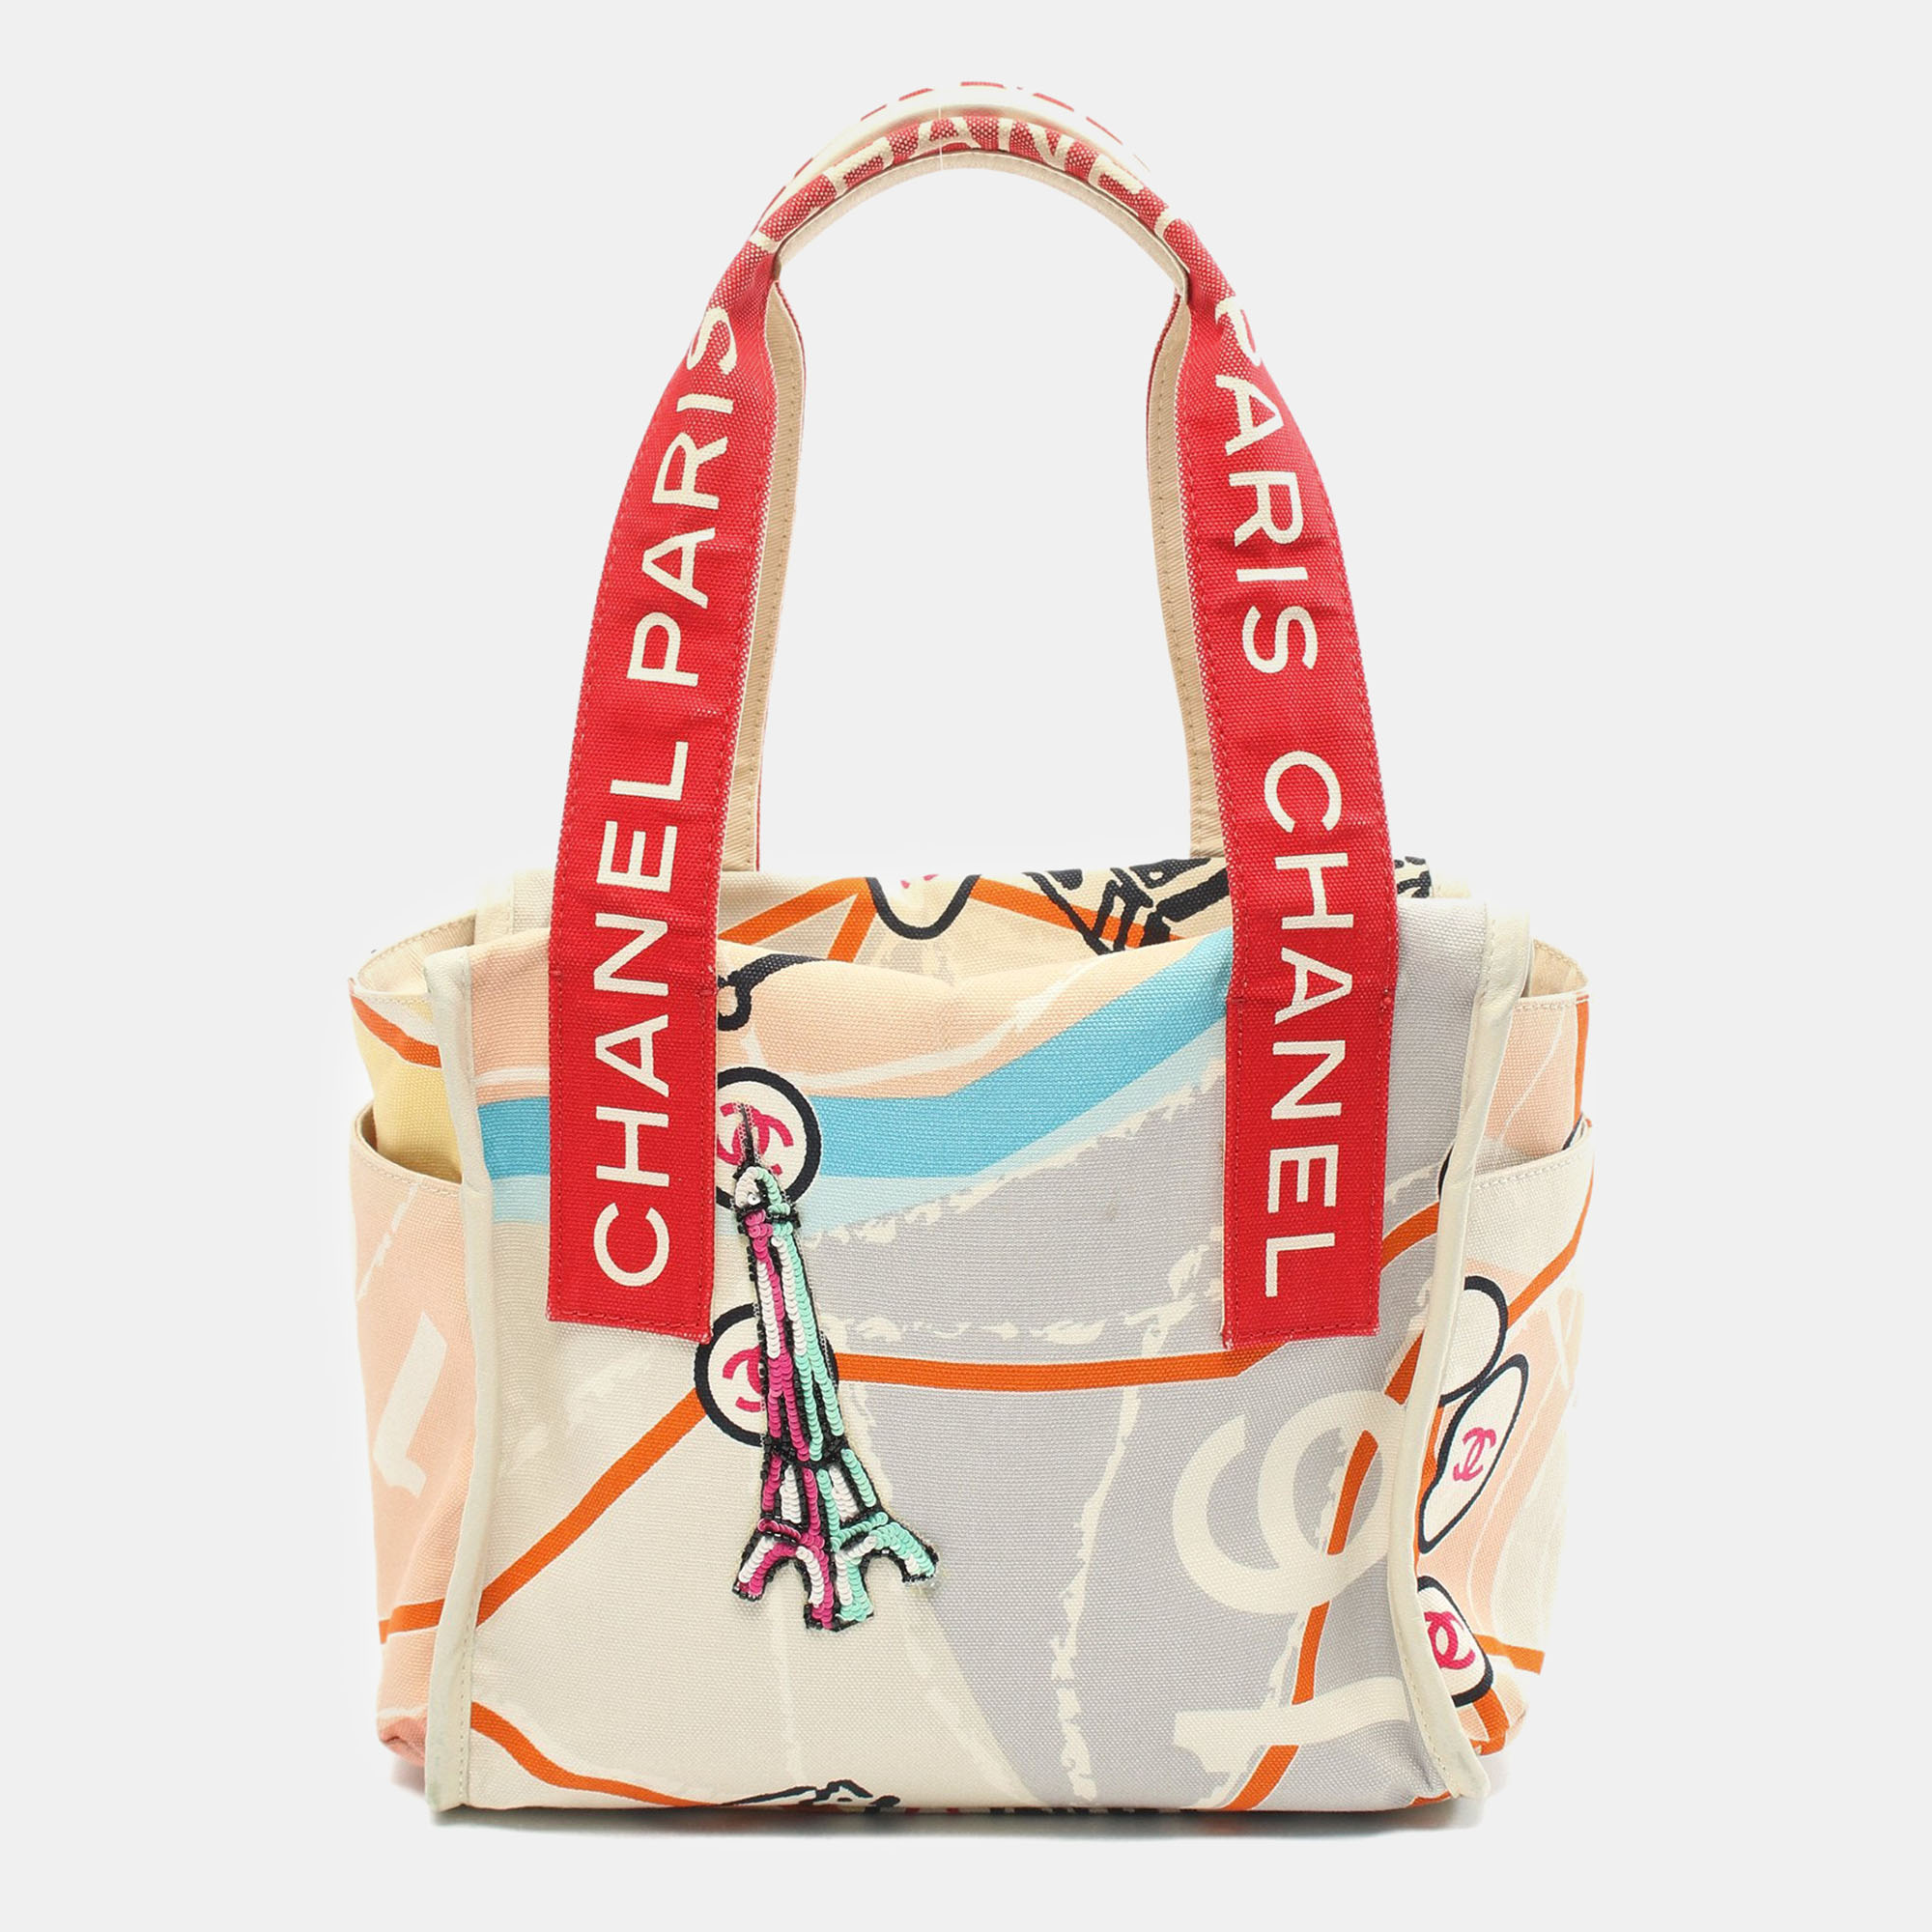 

Chanel Cruise Line Paris Map Handbag Tote bag Canvas Leather Light gray Red Multicolor